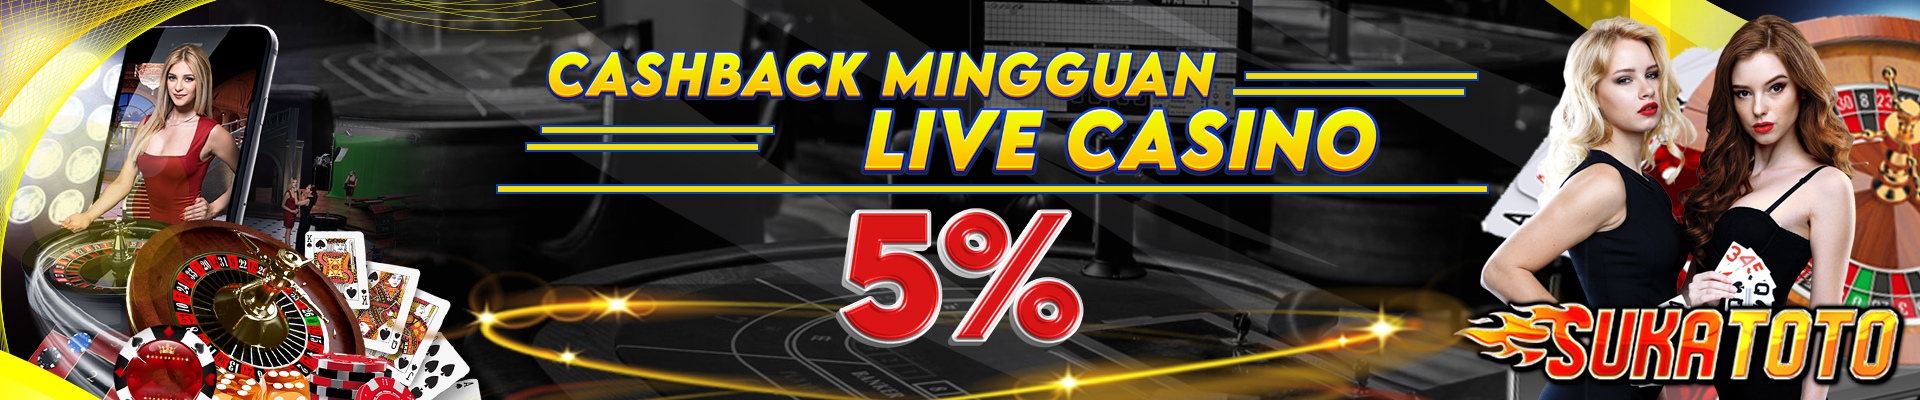 CASHBACK MINGGUAN LIVE CASINO 5%